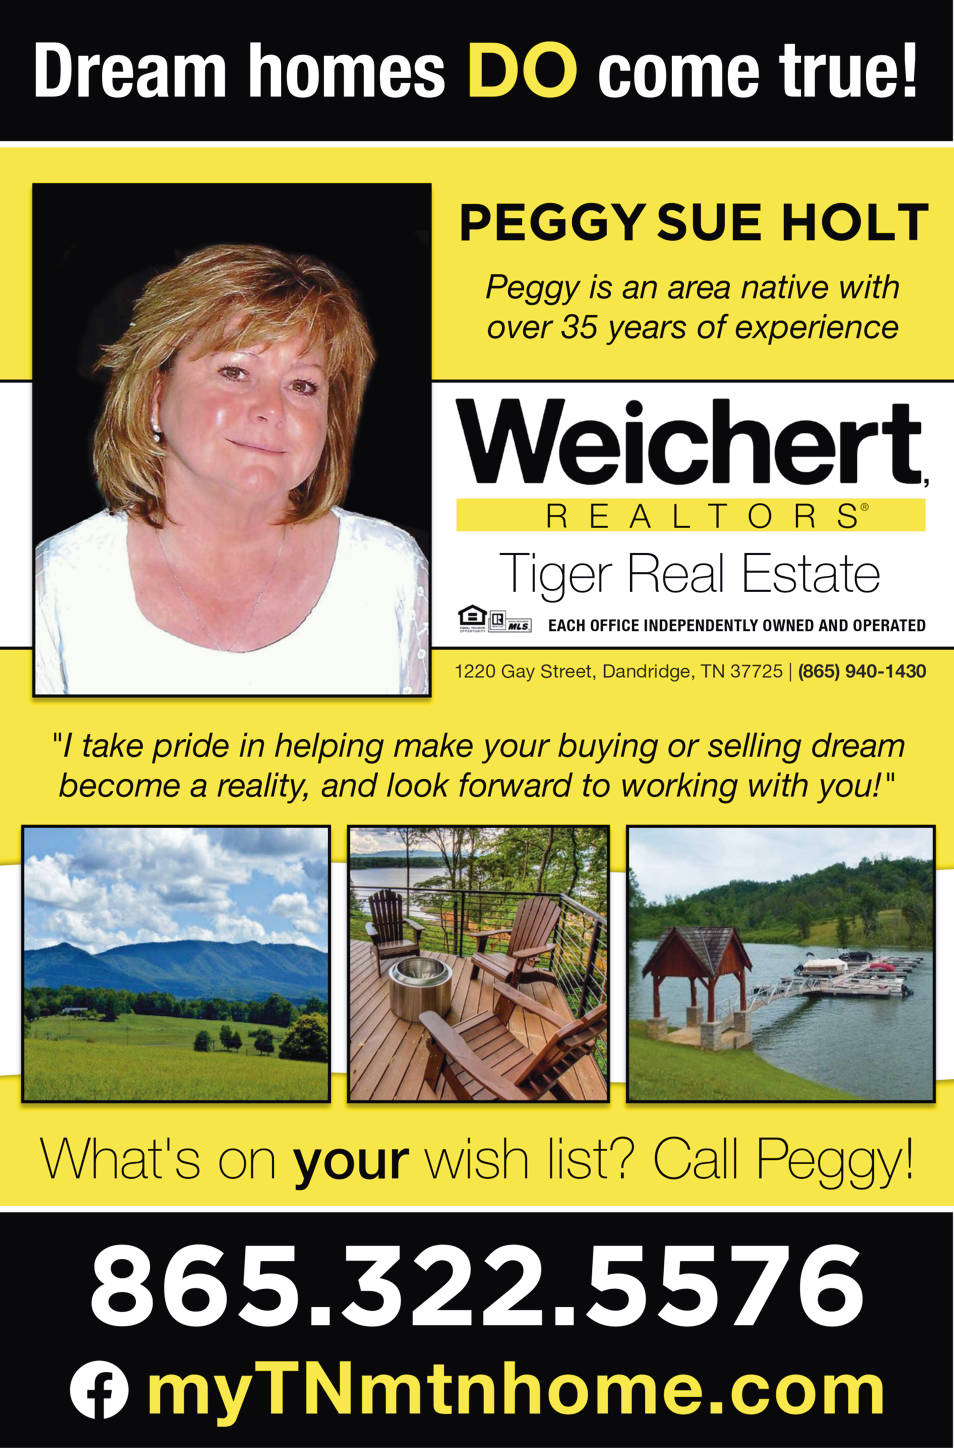 Weichert Realtors Tiger Real Estate - Peggy Sue Holt Print Ad